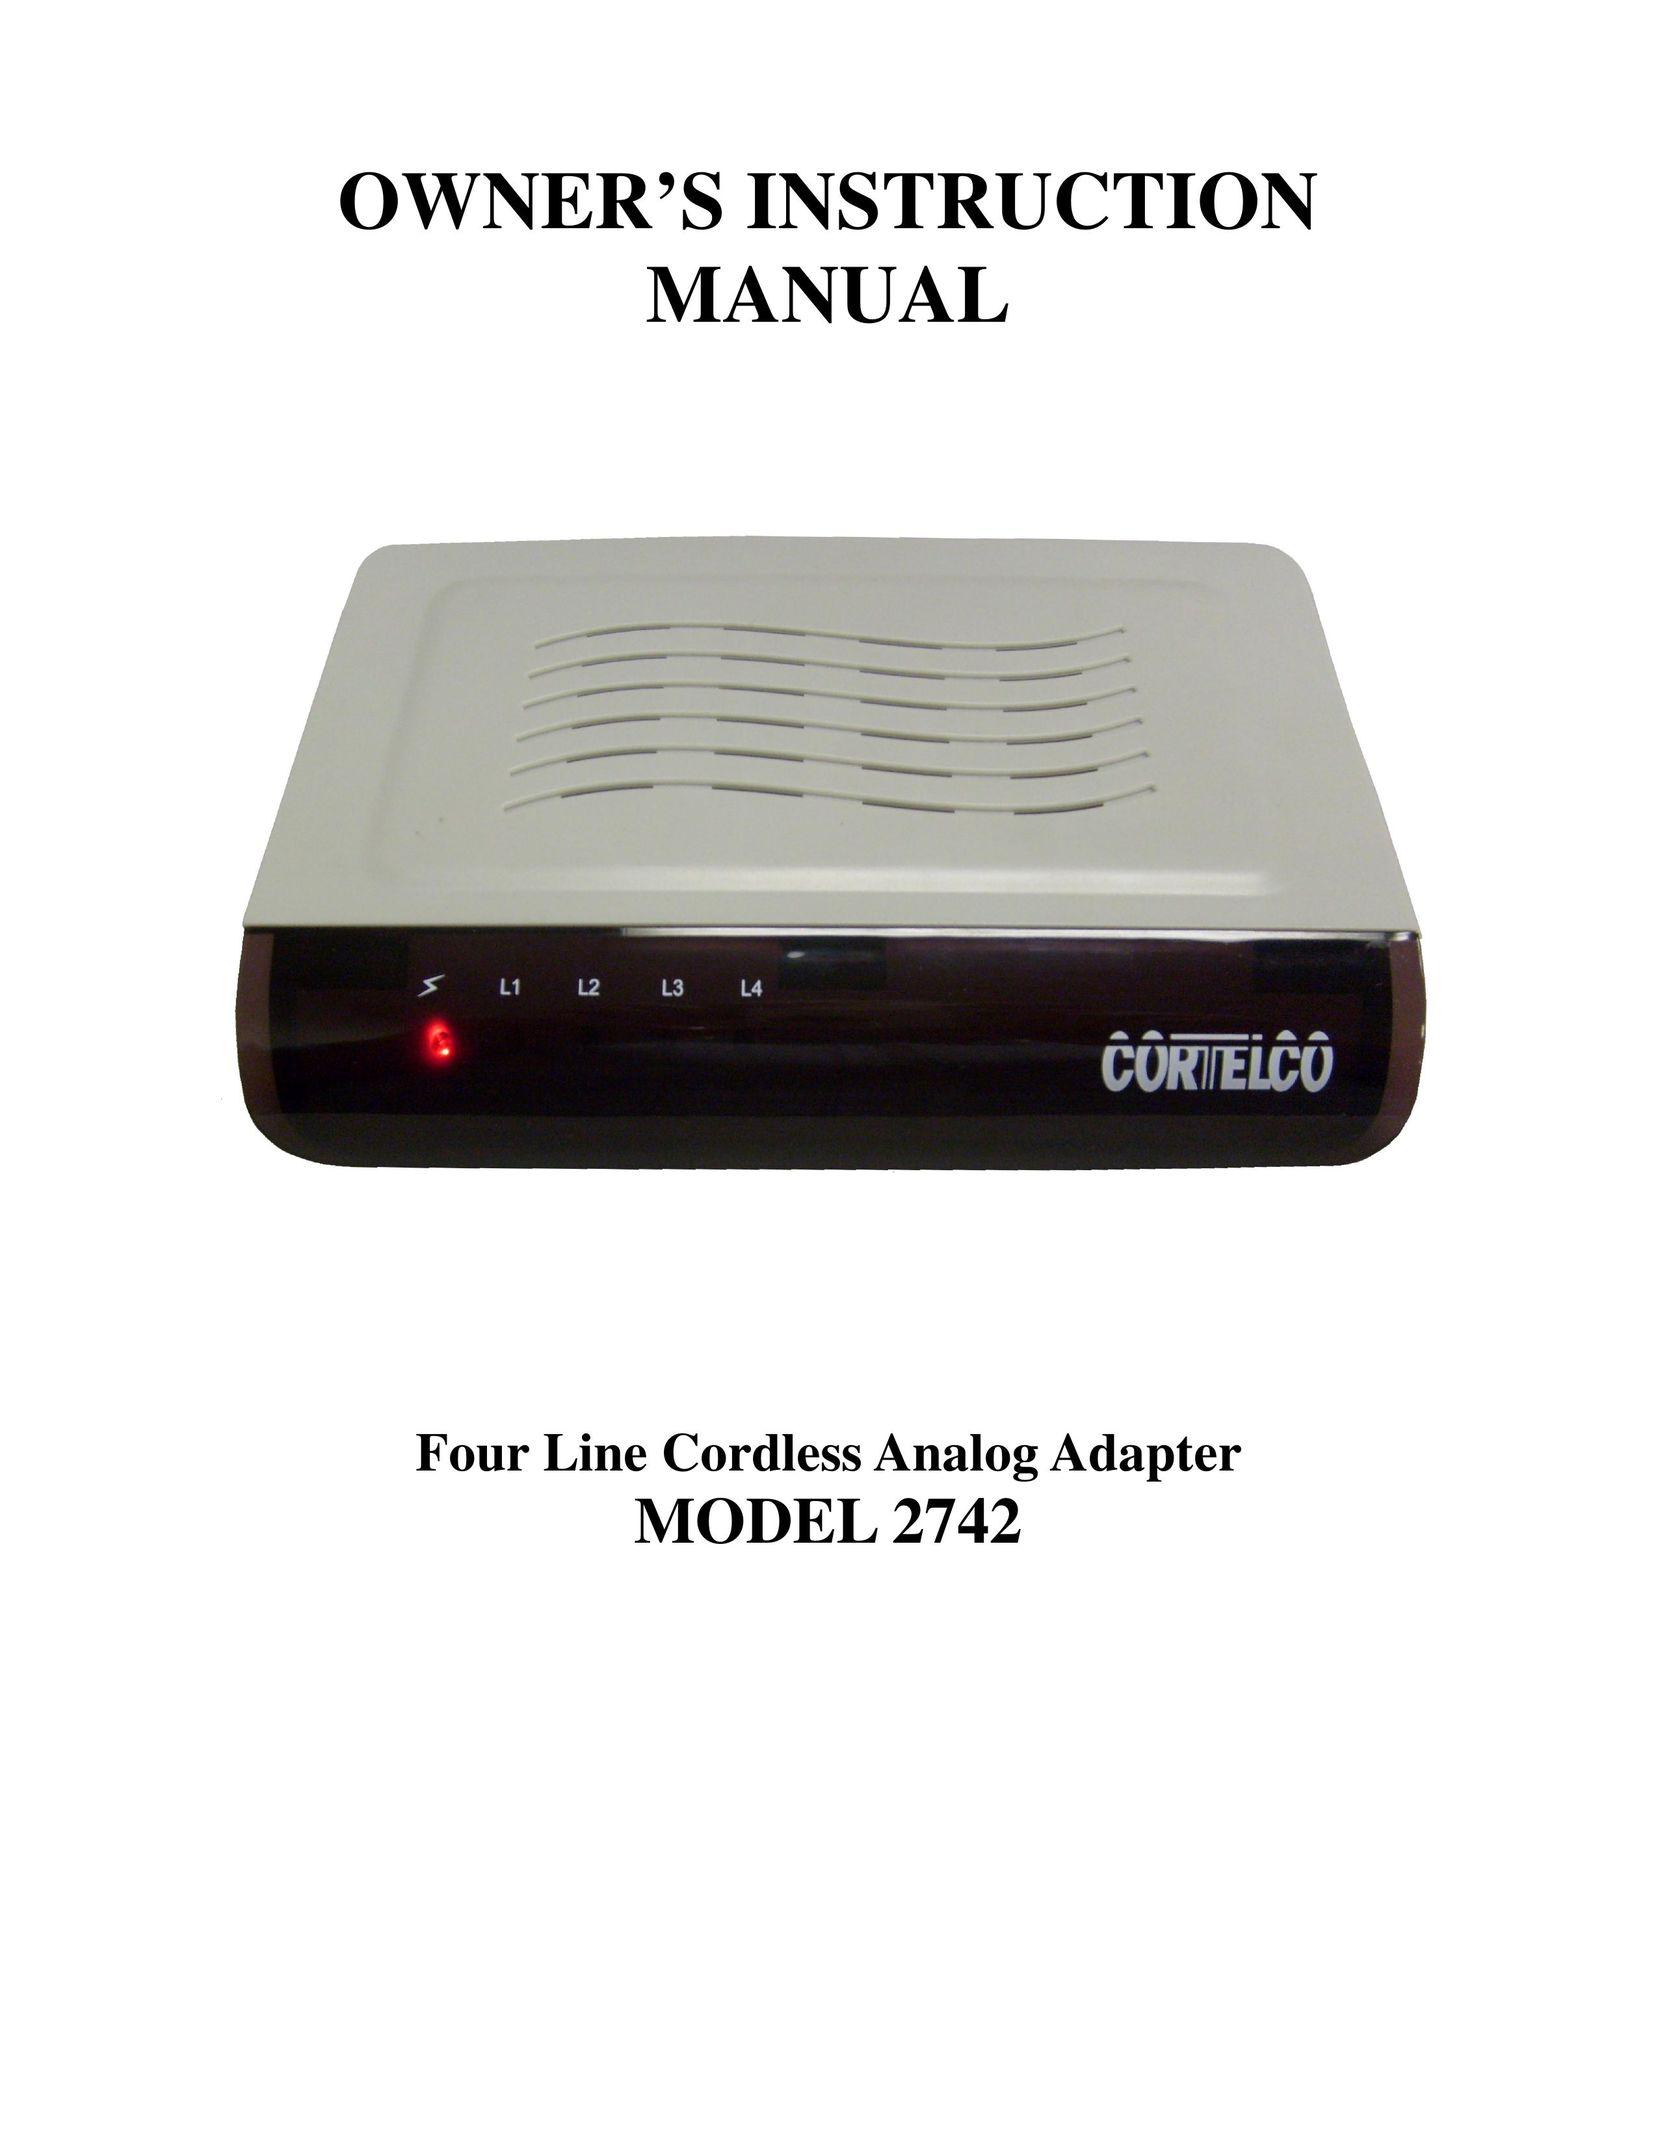 Cortelco 2742 Telephone Accessories User Manual